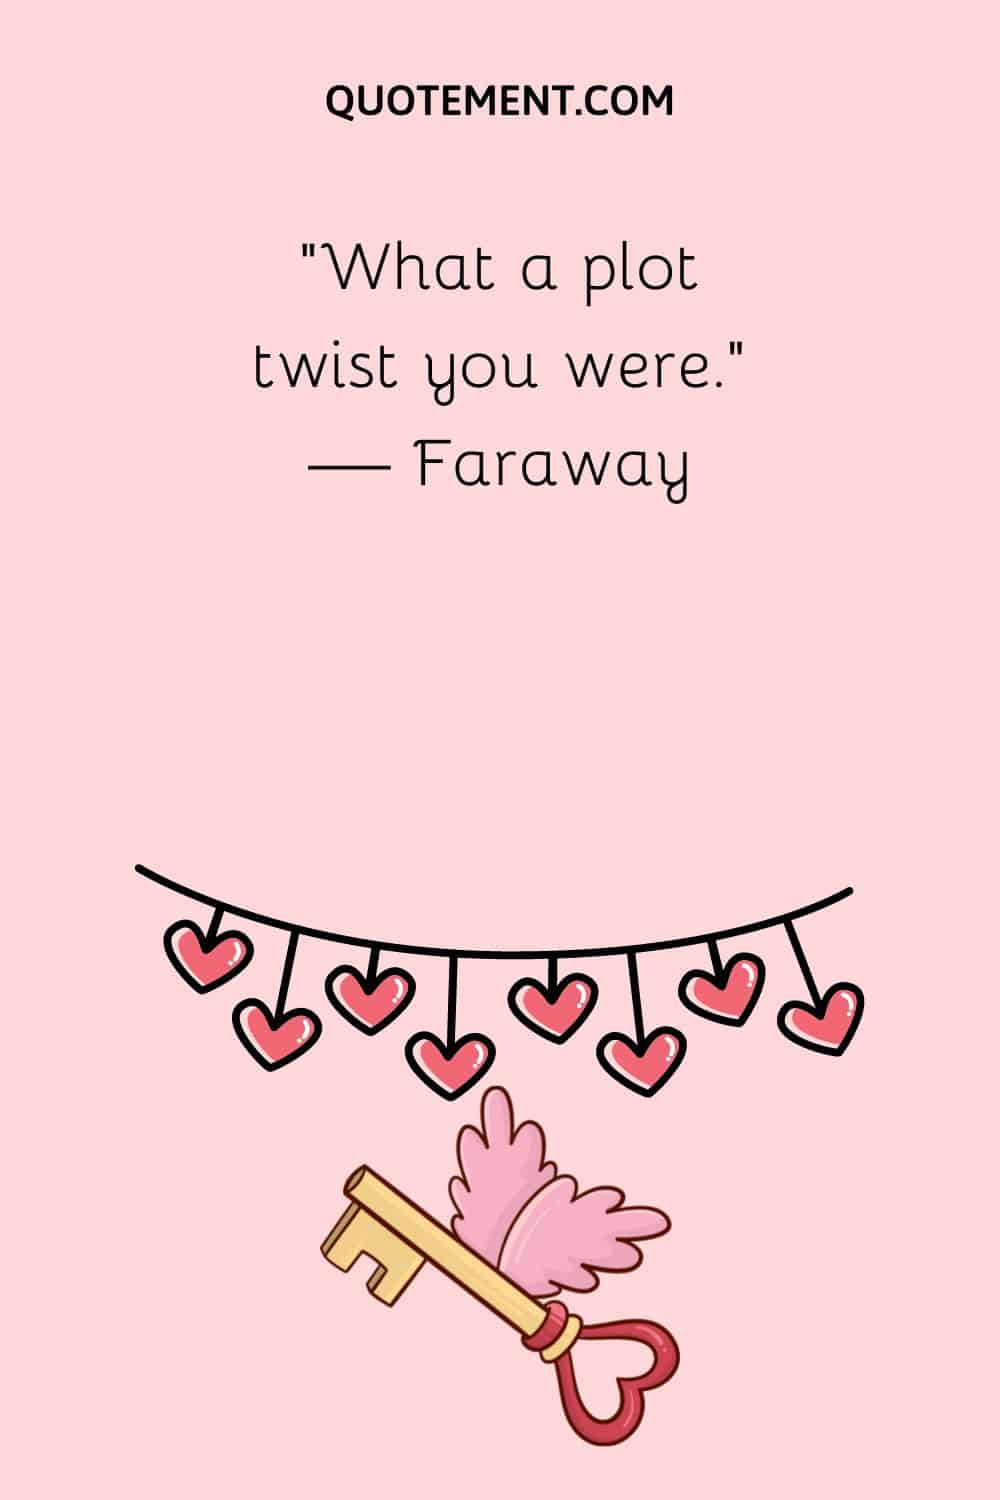 “What a plot twist you were.” — Faraway